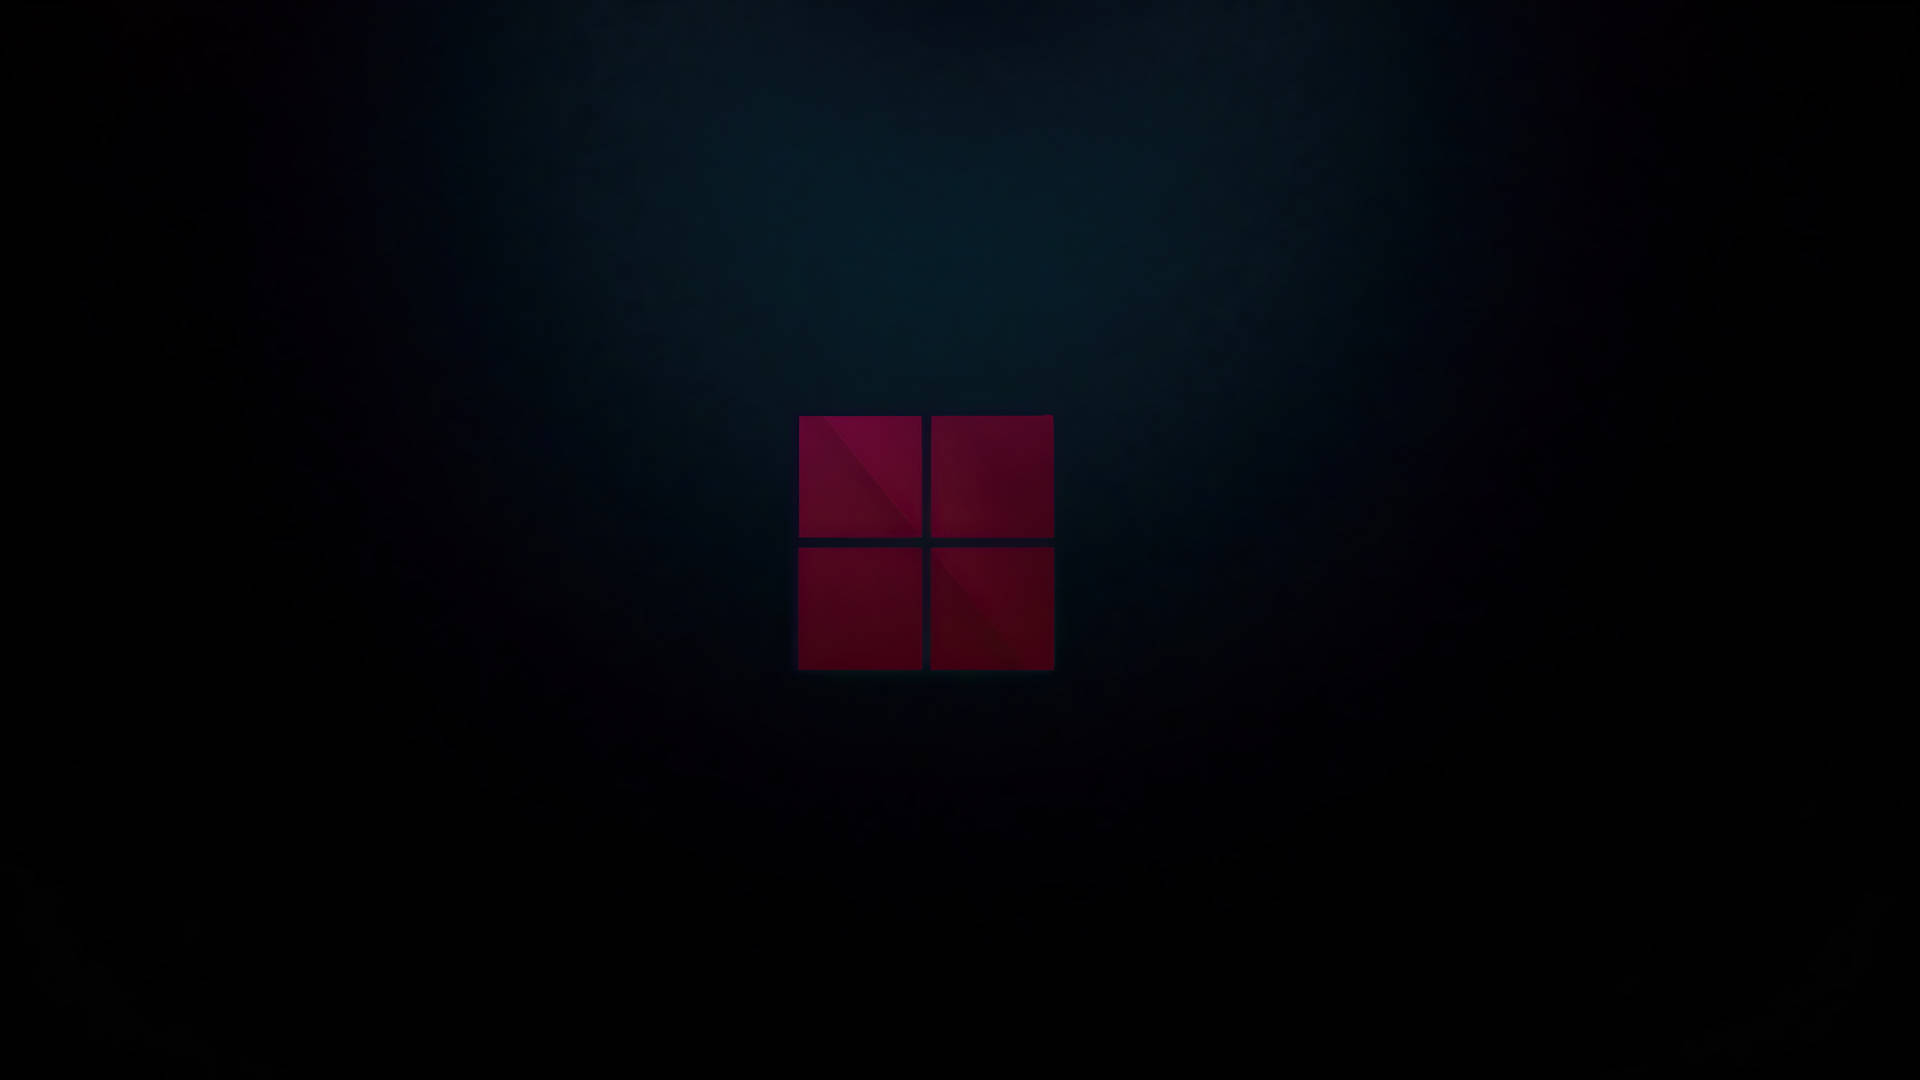 Red Dark Windows Logo Wallpaper